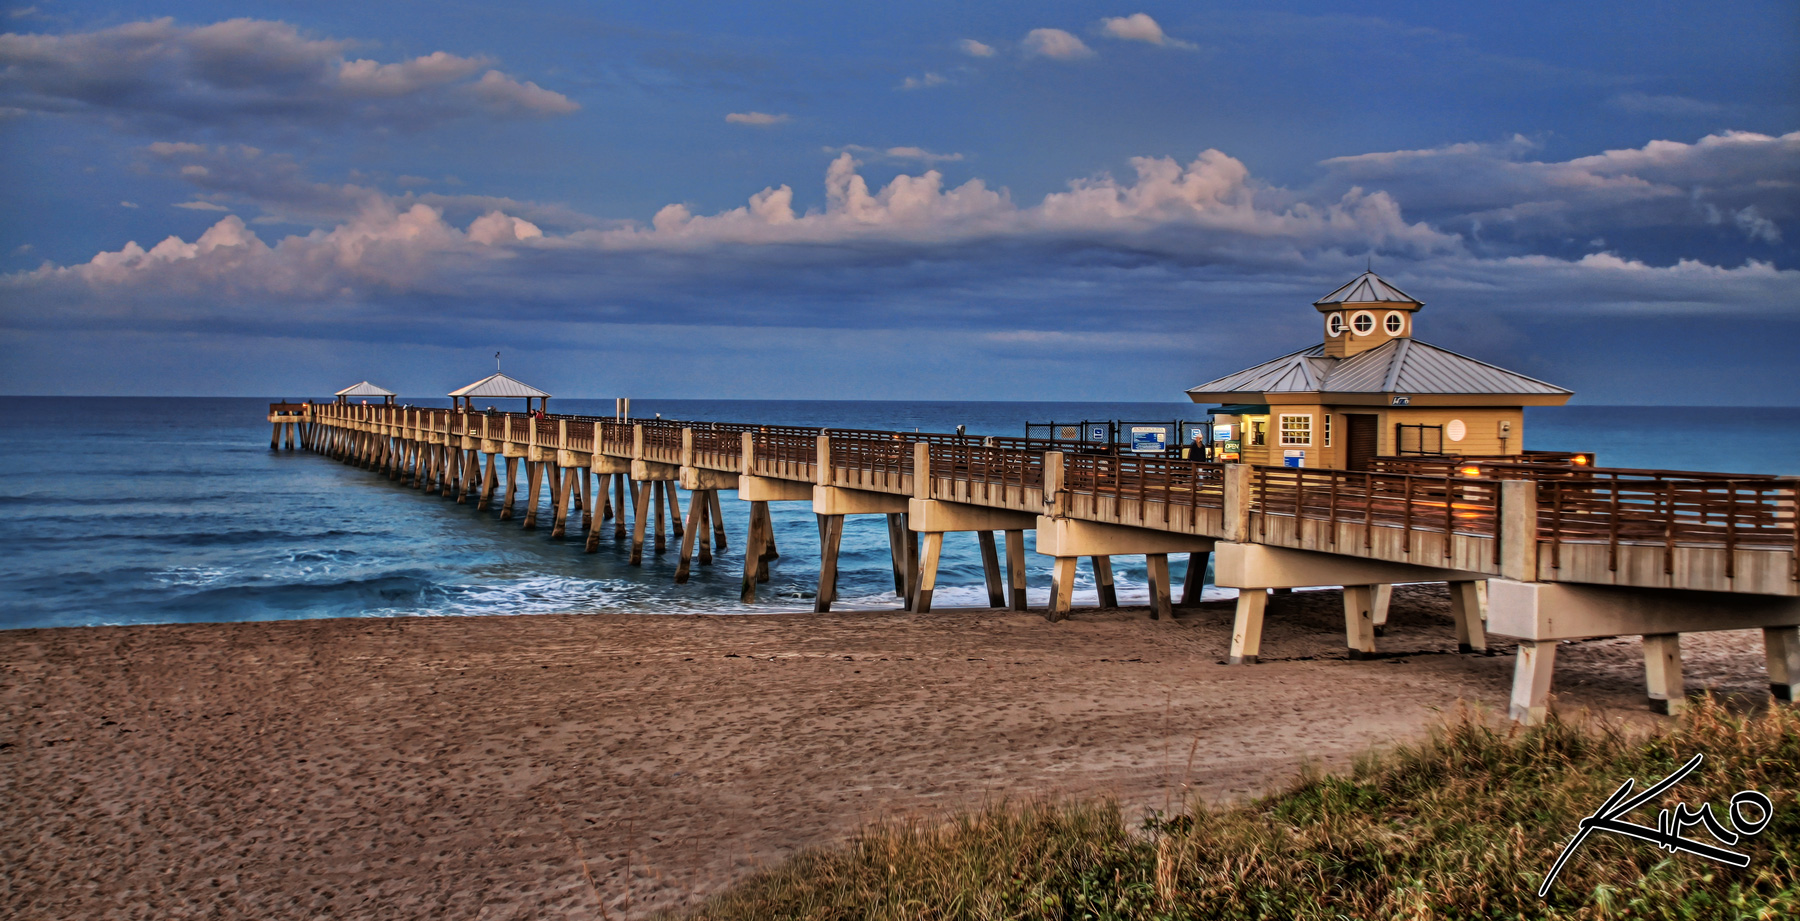 Juno Beach Pier – Juno Beach, Florida